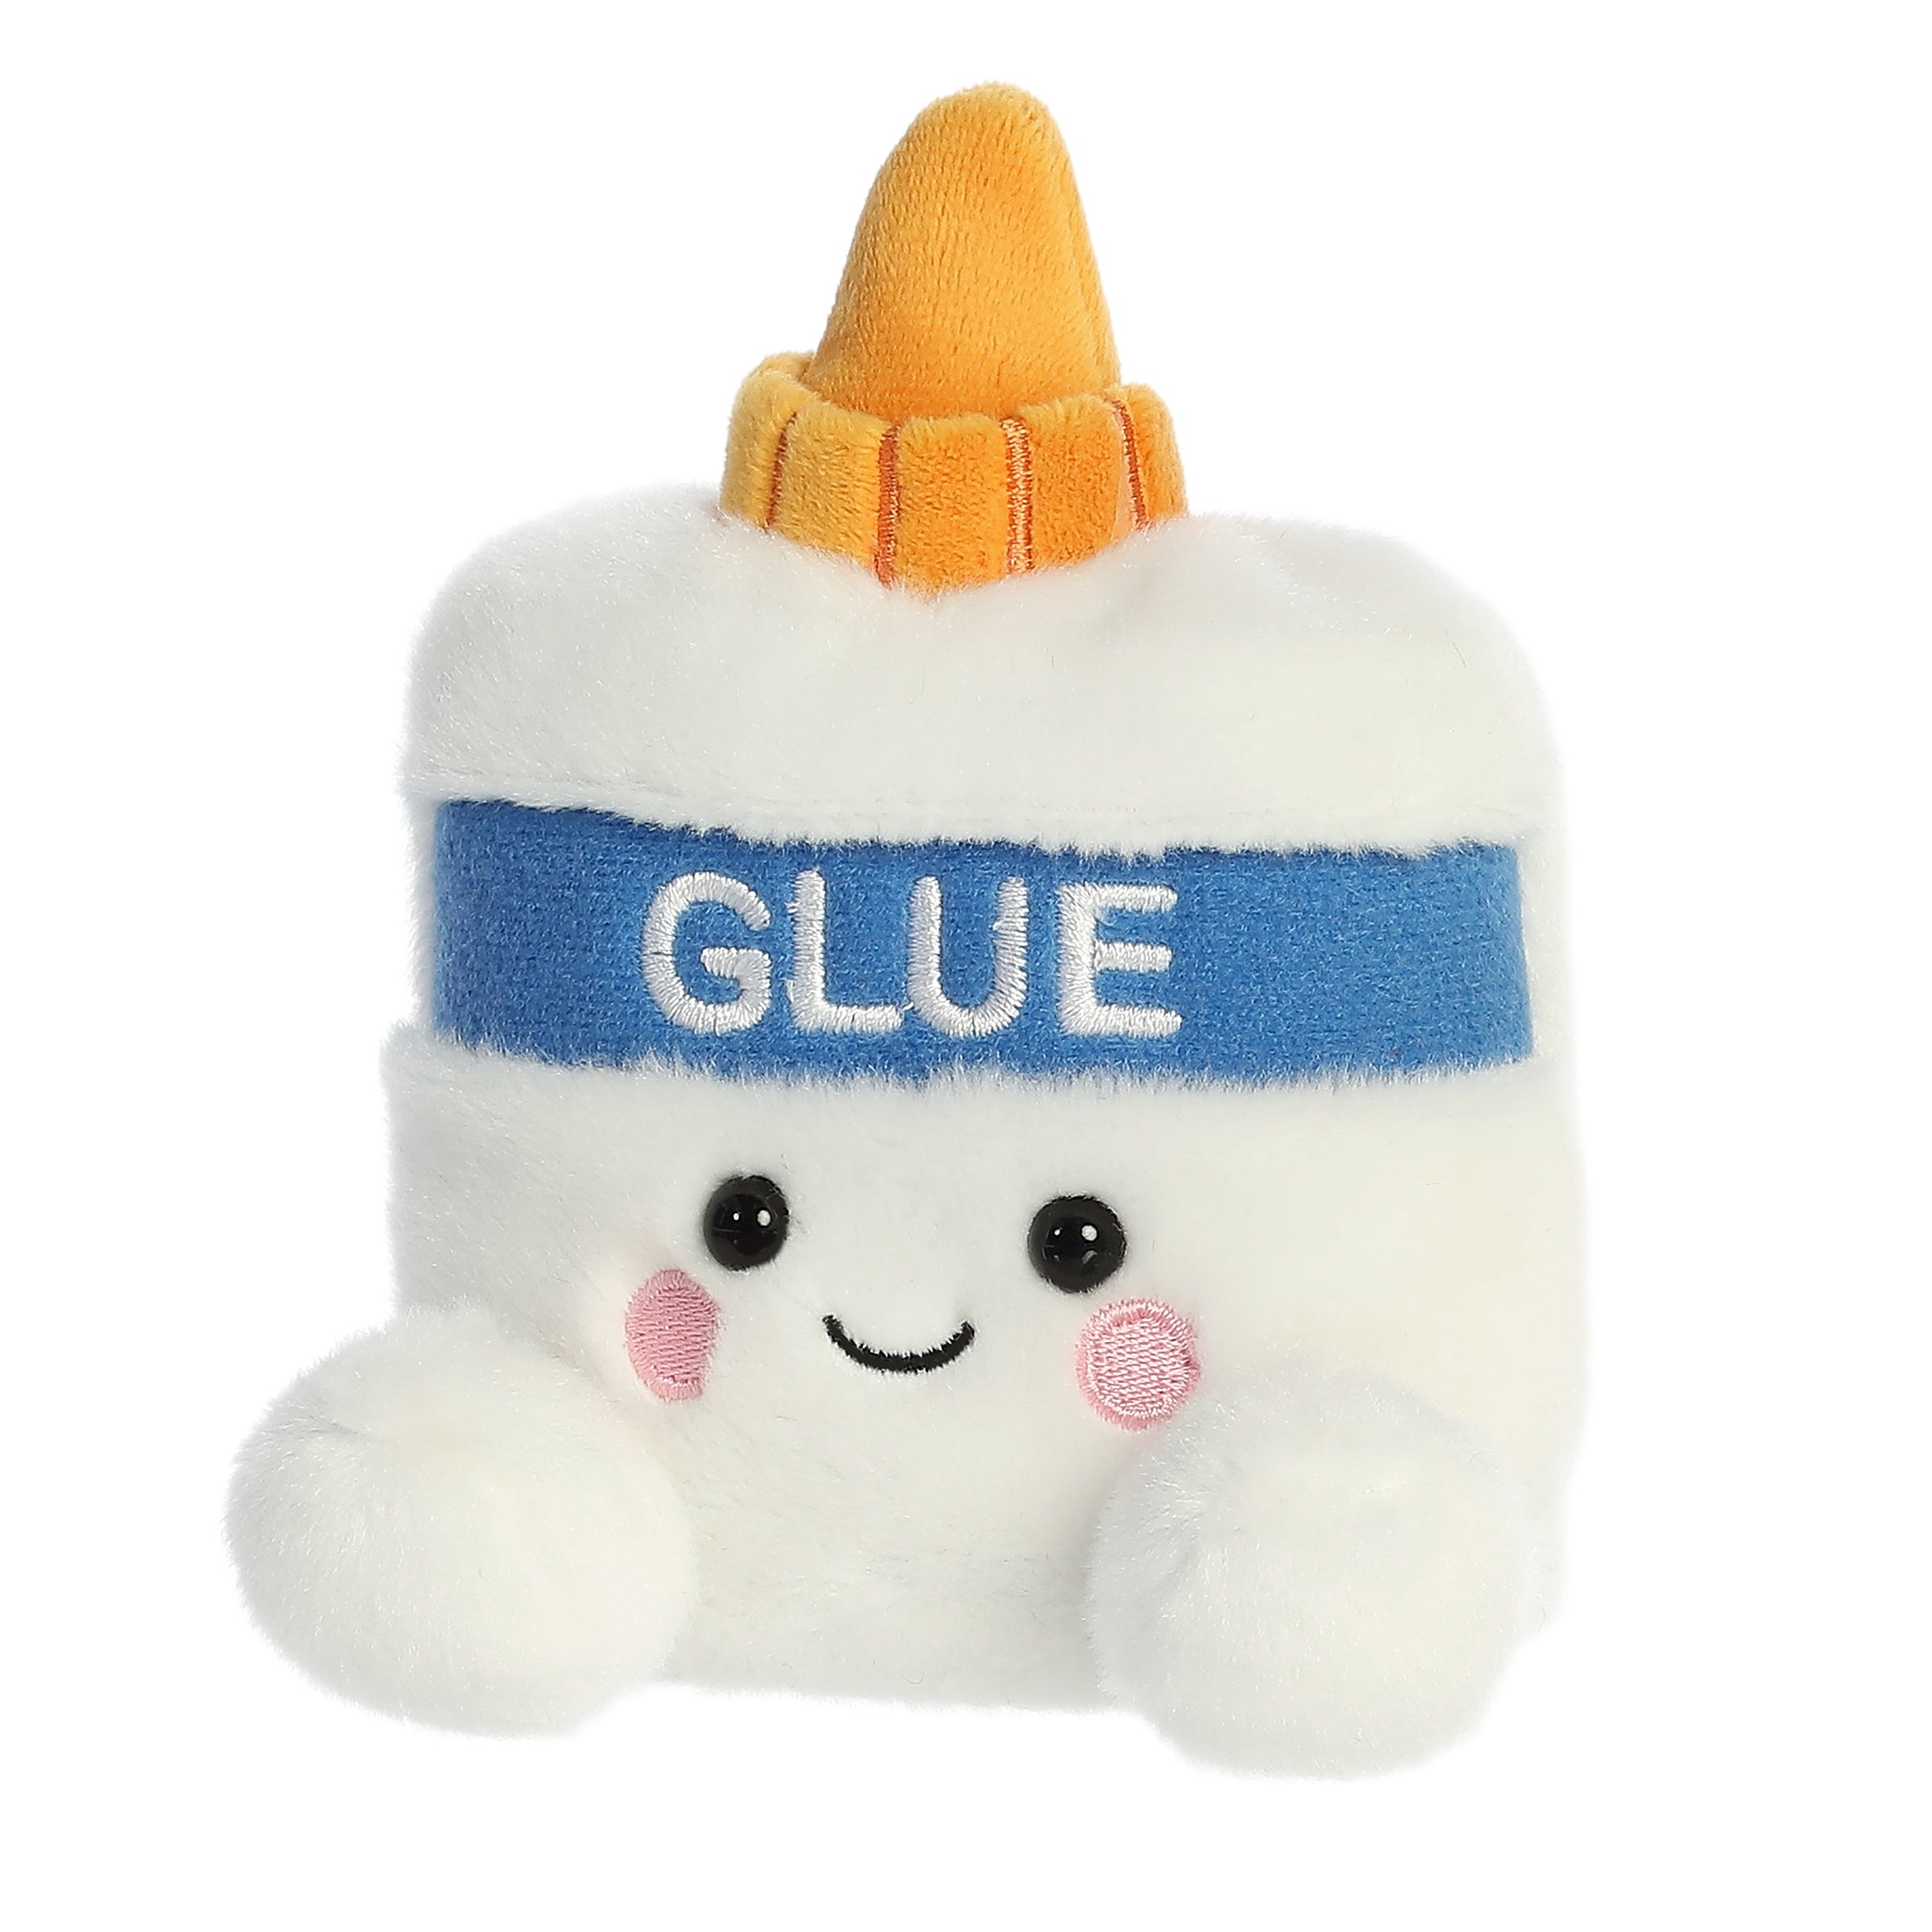 Gooey Glue™